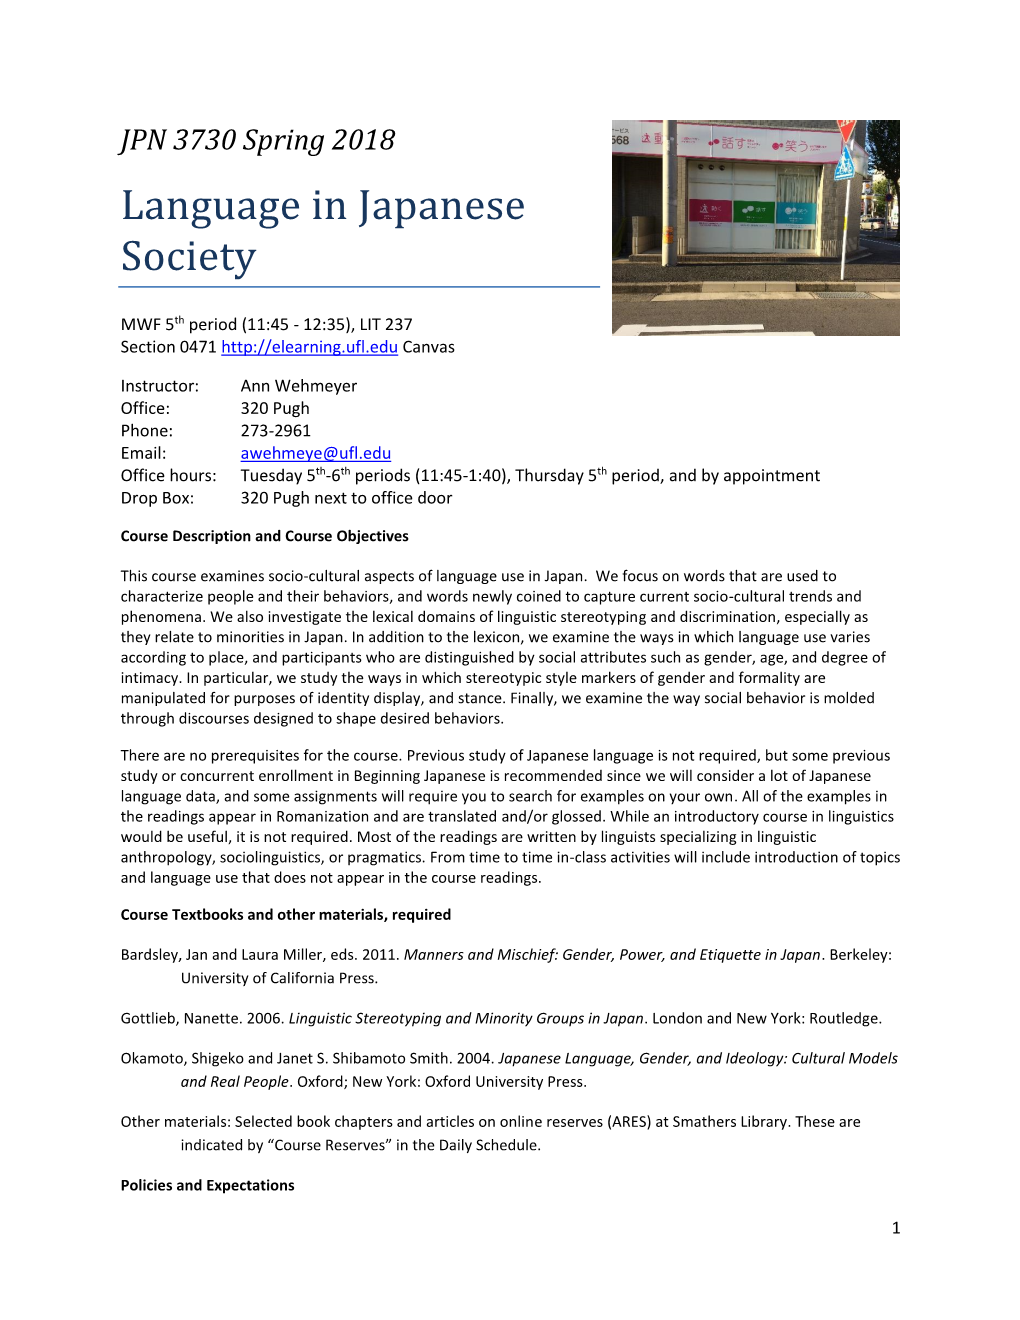 Language in Japanese Society